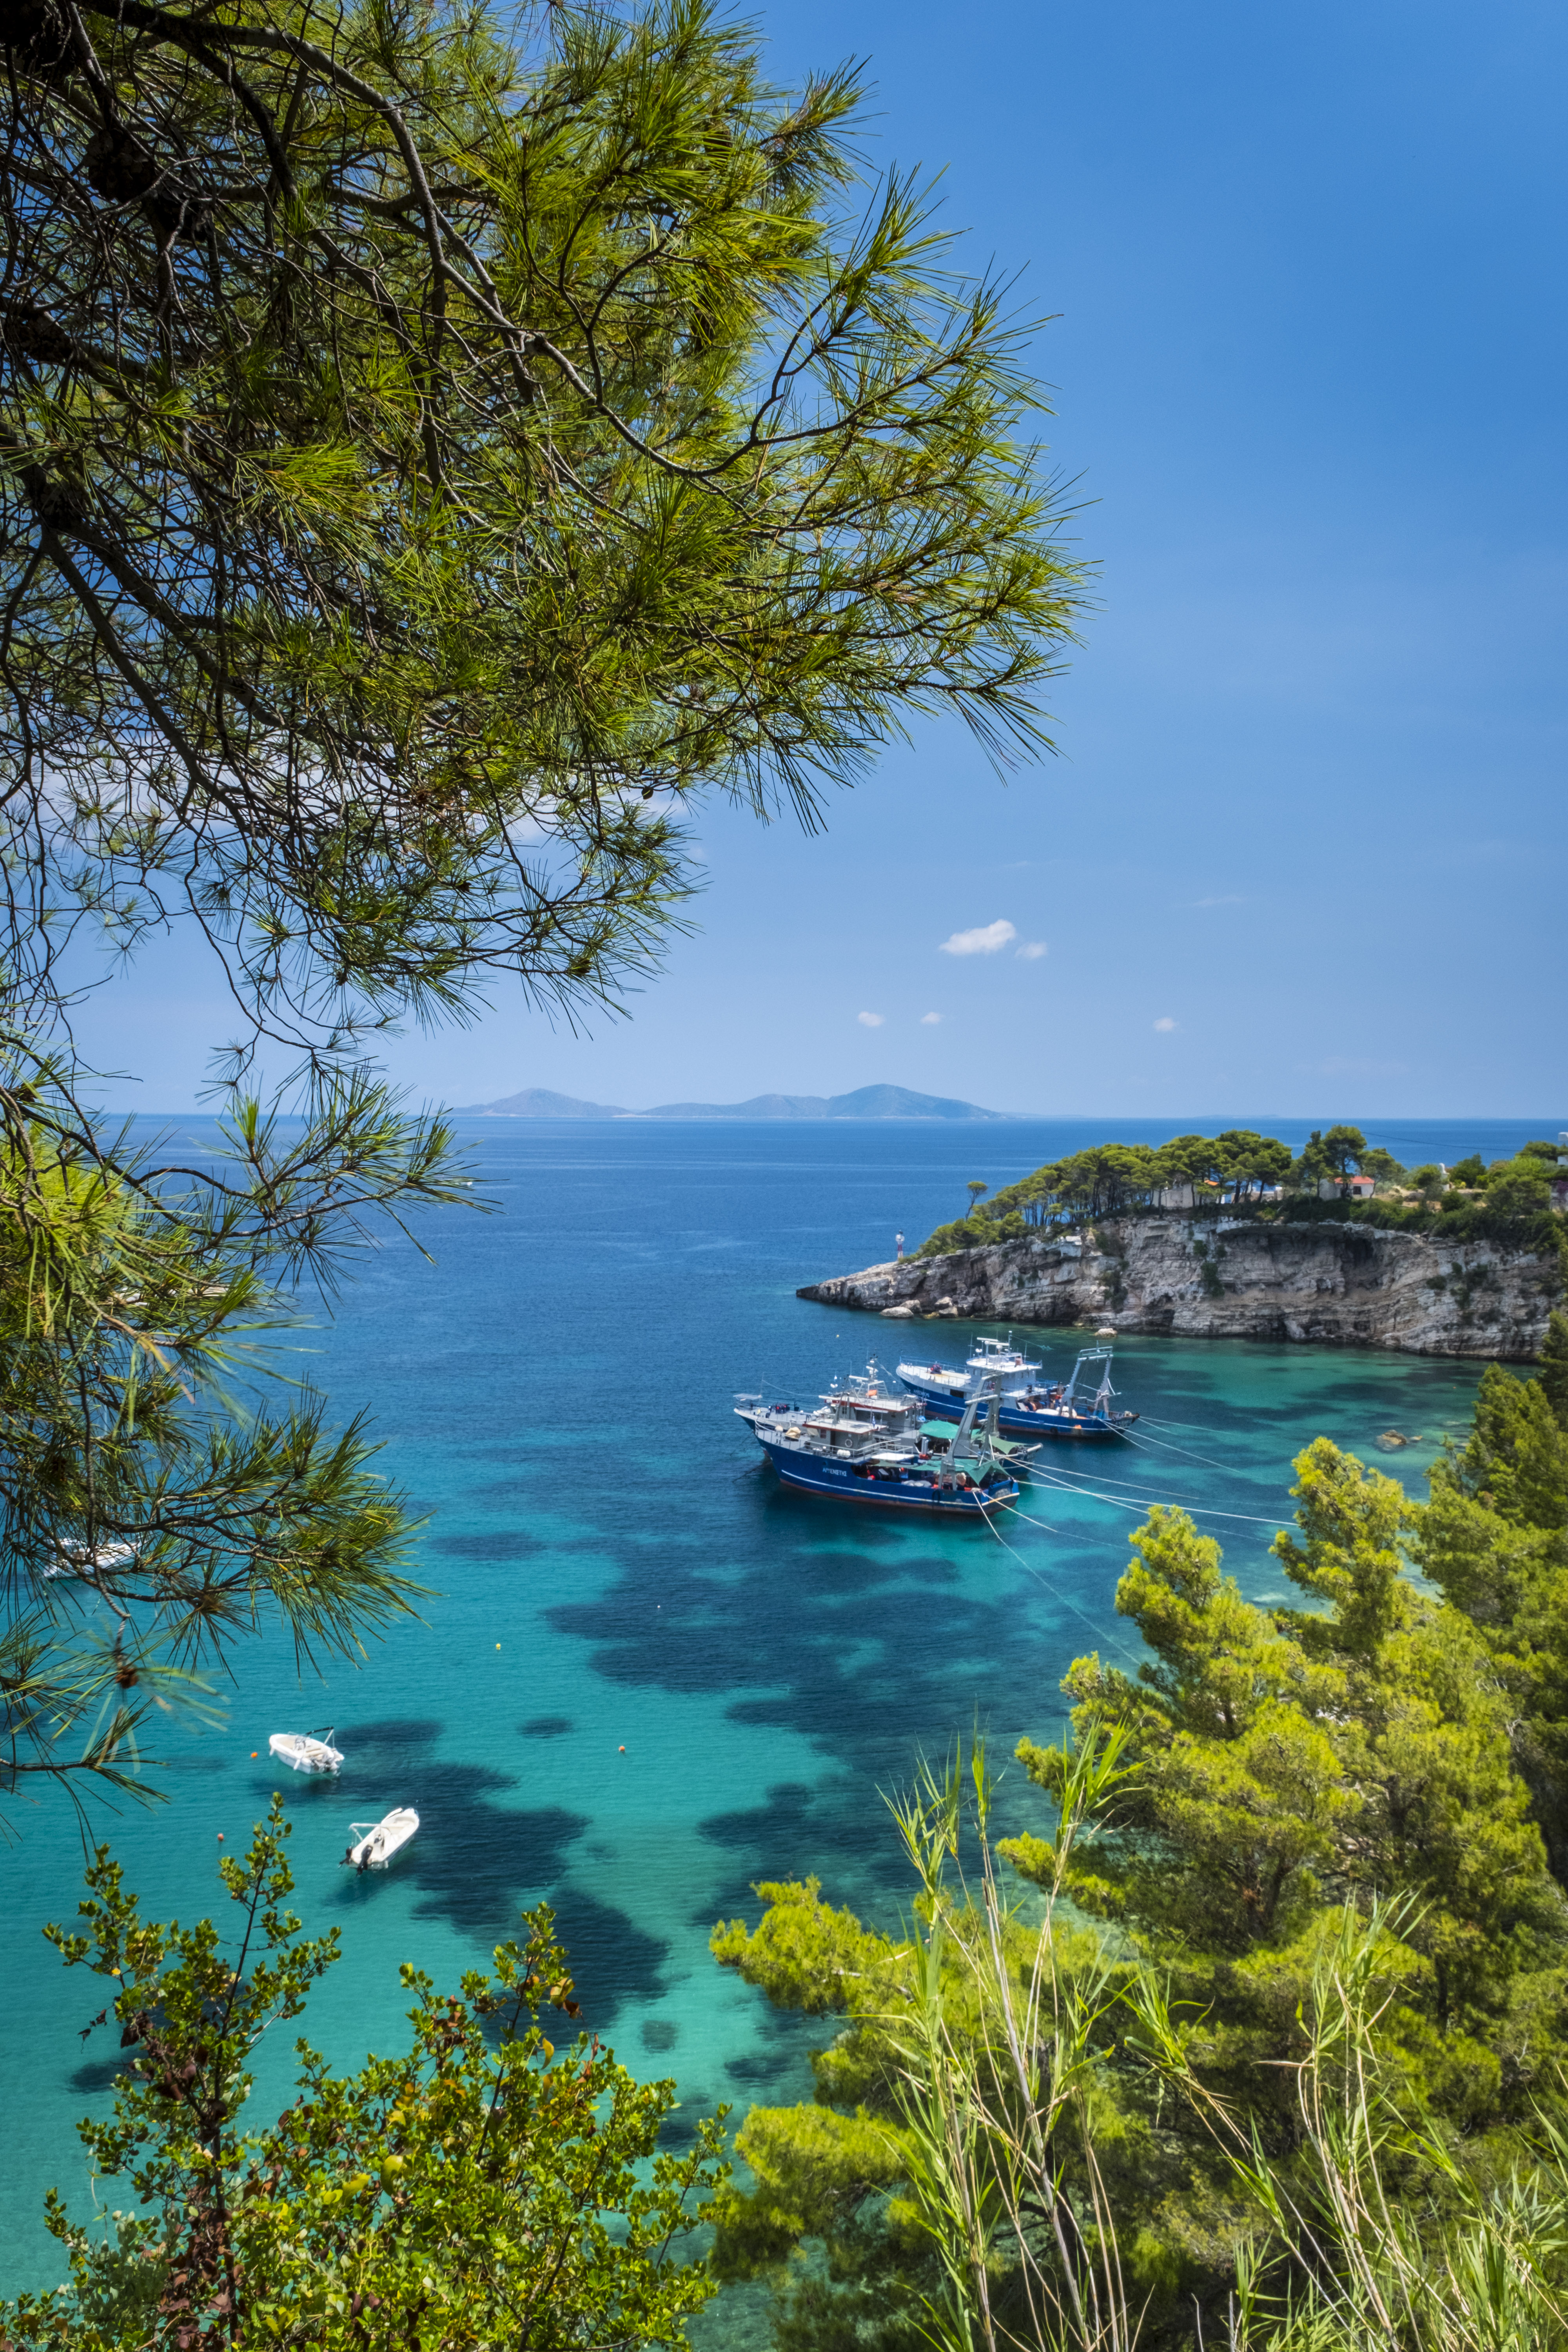 Alonissos is the quietest inhabited island in the Sporades archipelago, Greece